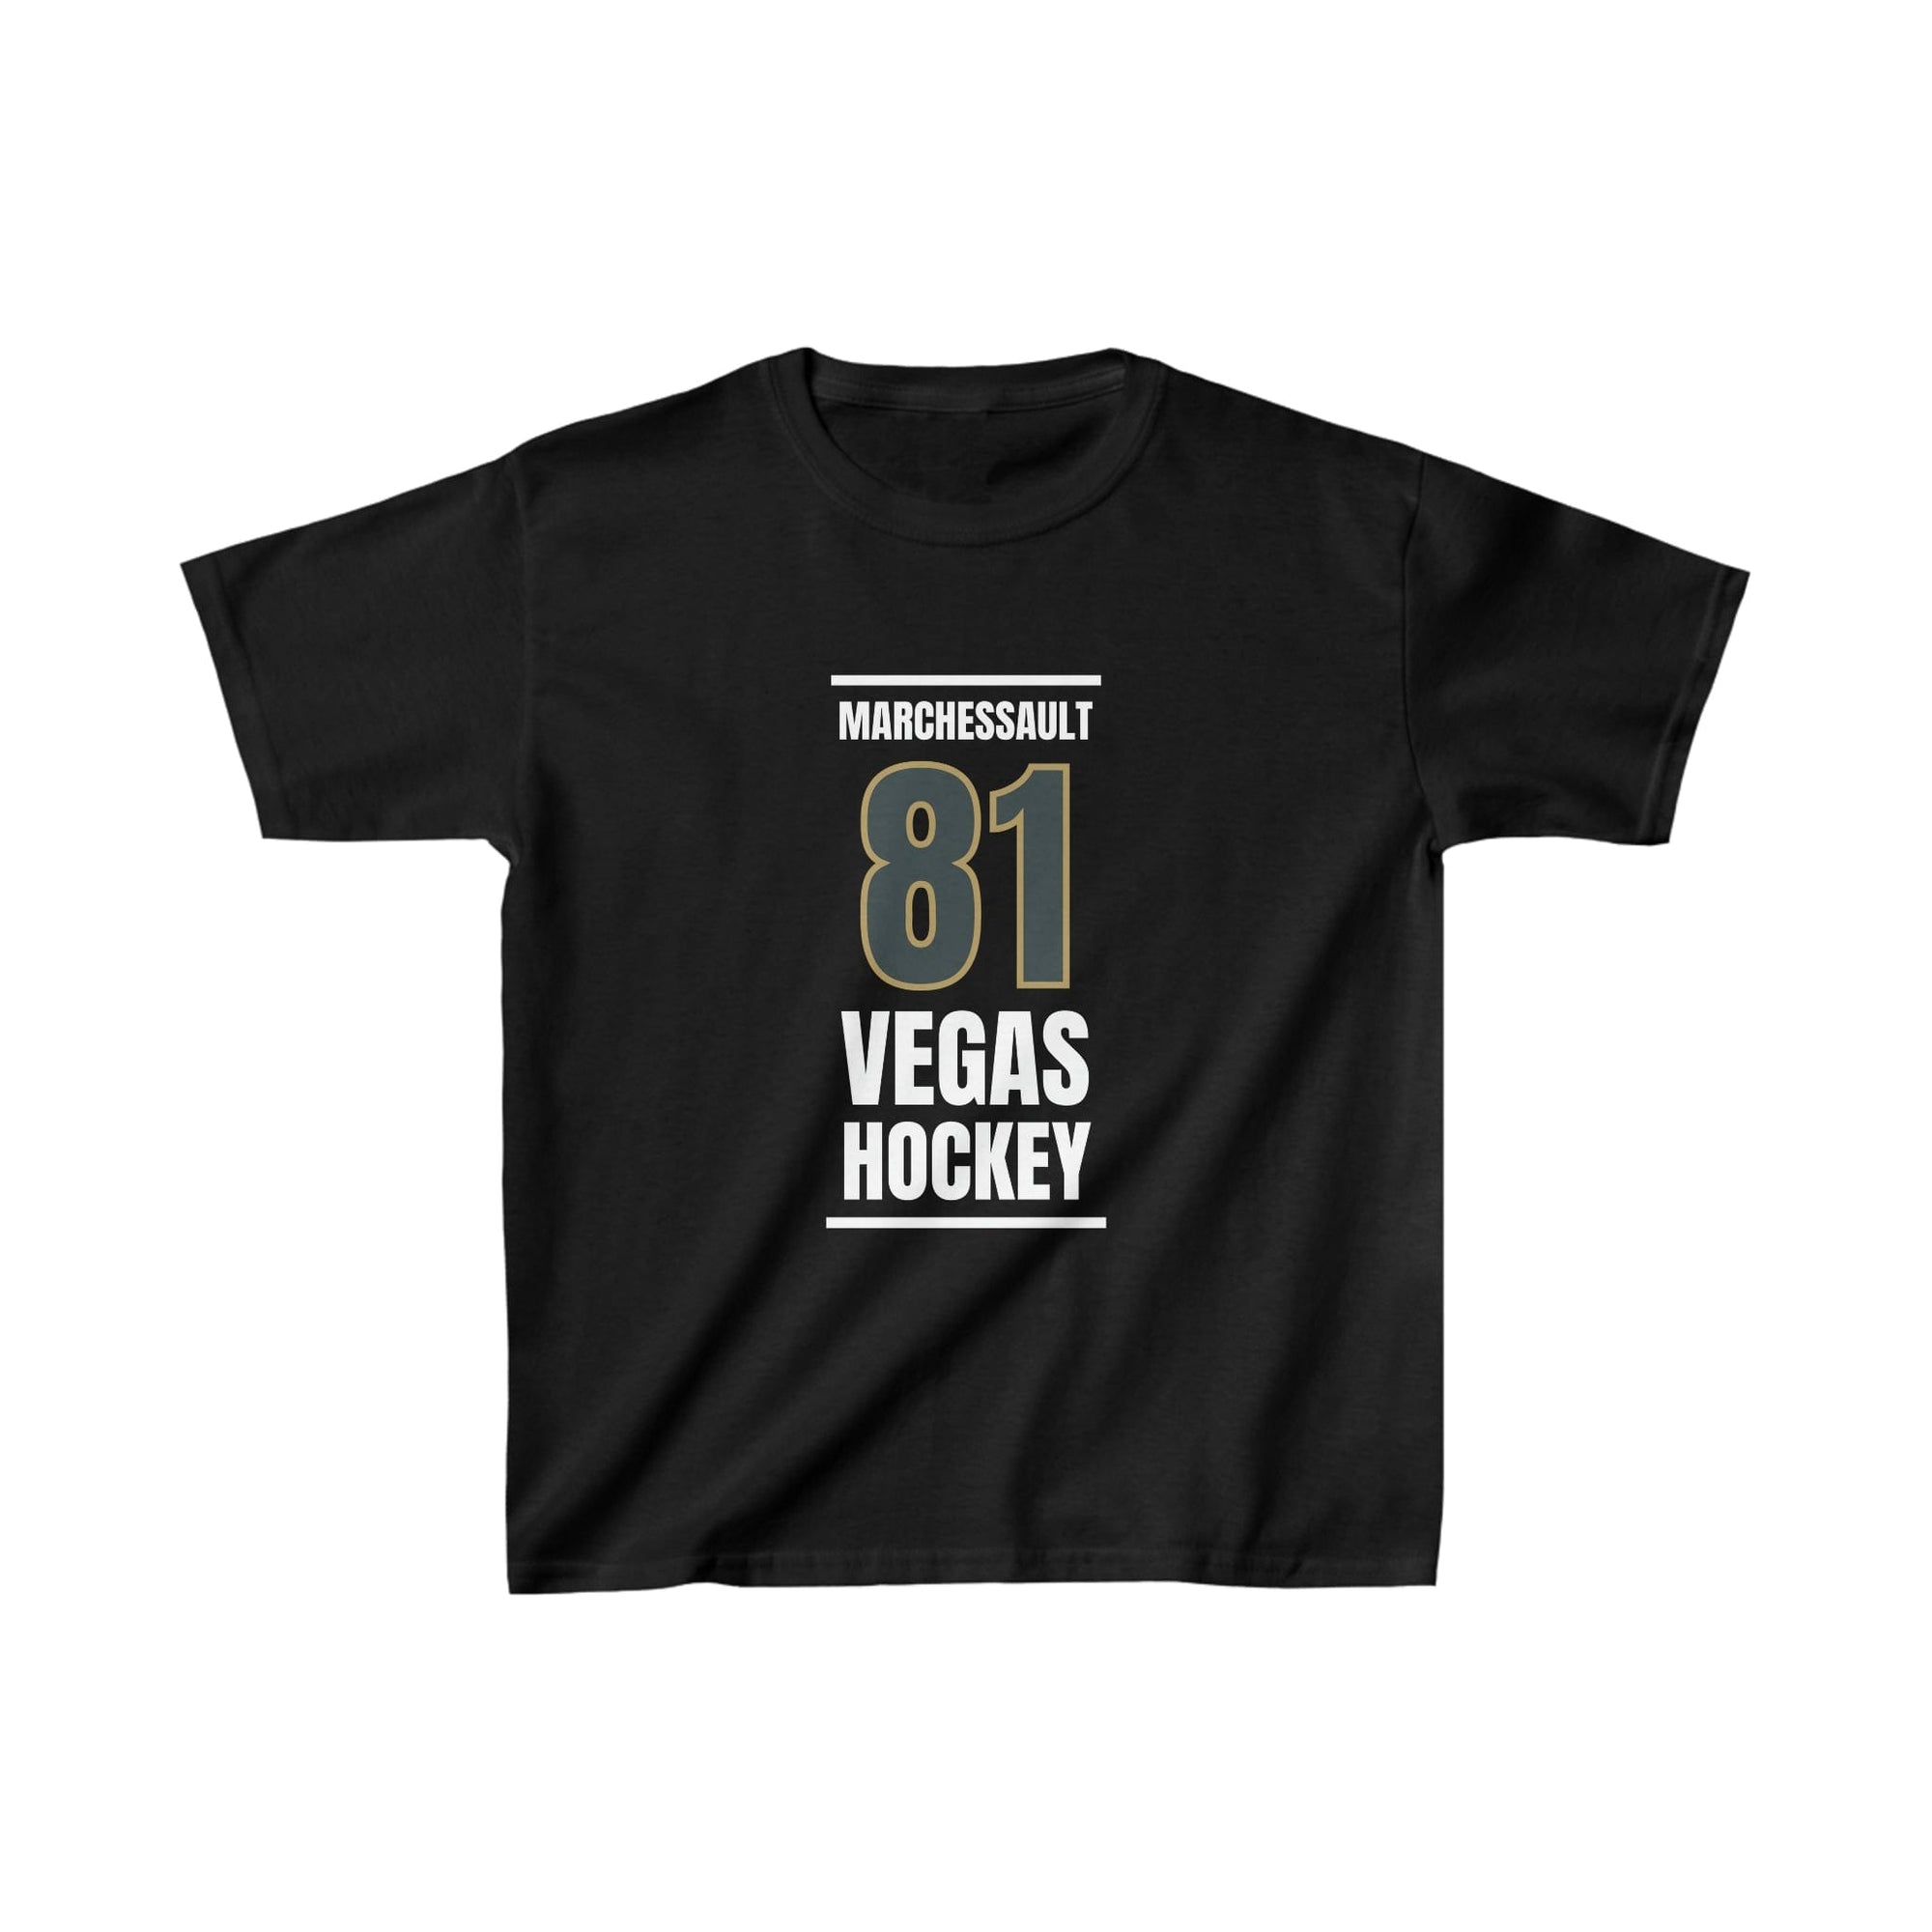 Kids clothes Marchessault 81 Vegas Hockey Steel Gray Vertical Design Kids Tee